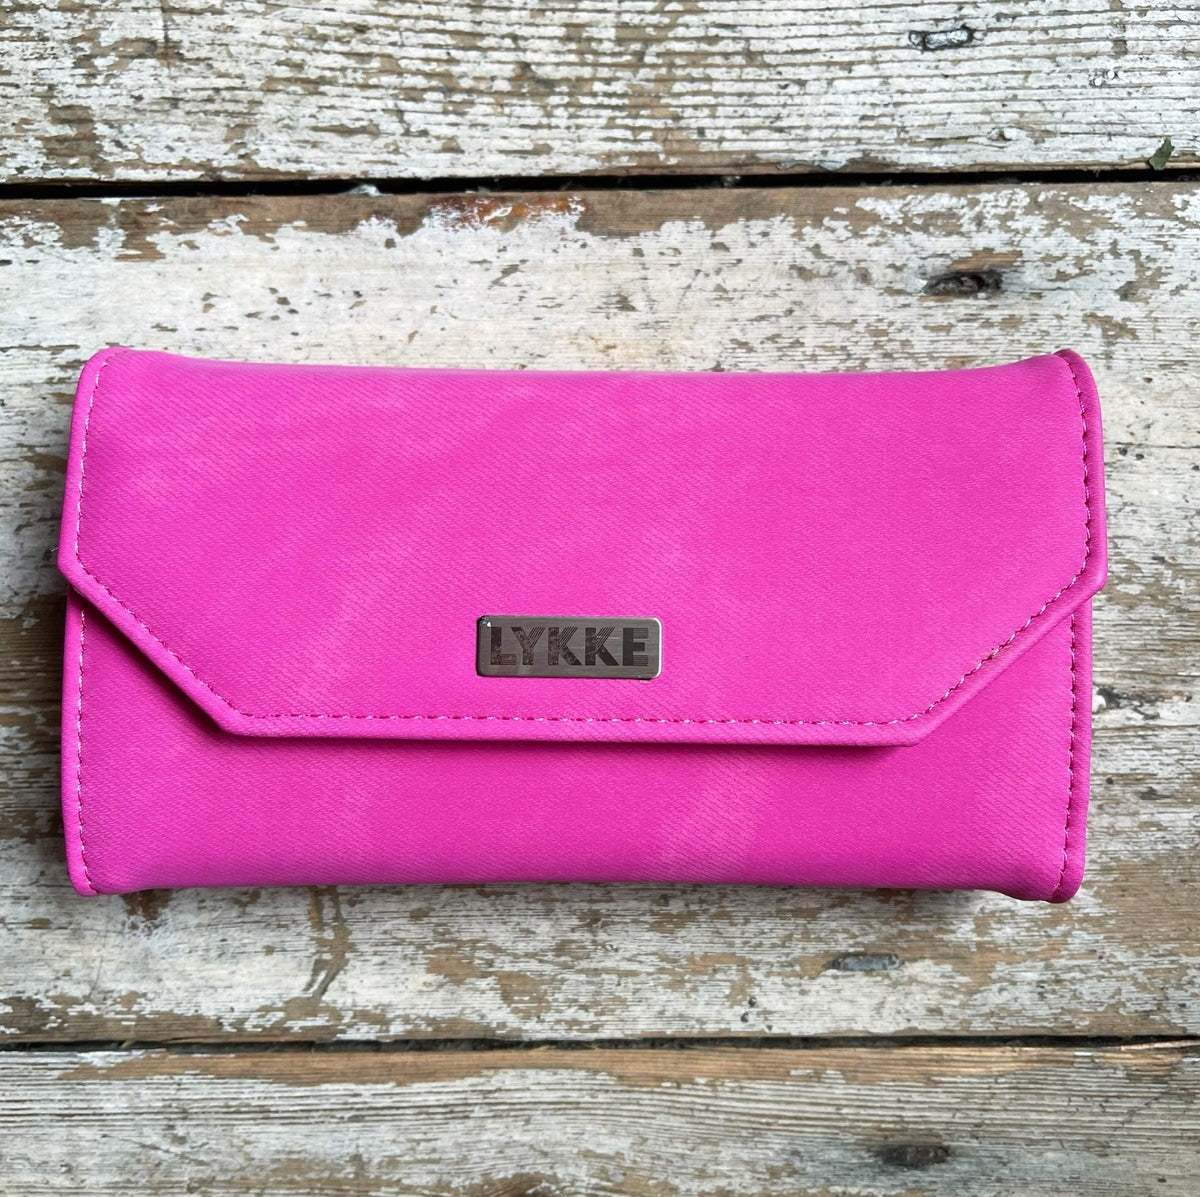 Lykke Blush 3.5 Set with Pink Case – The Yarn Club, Inc